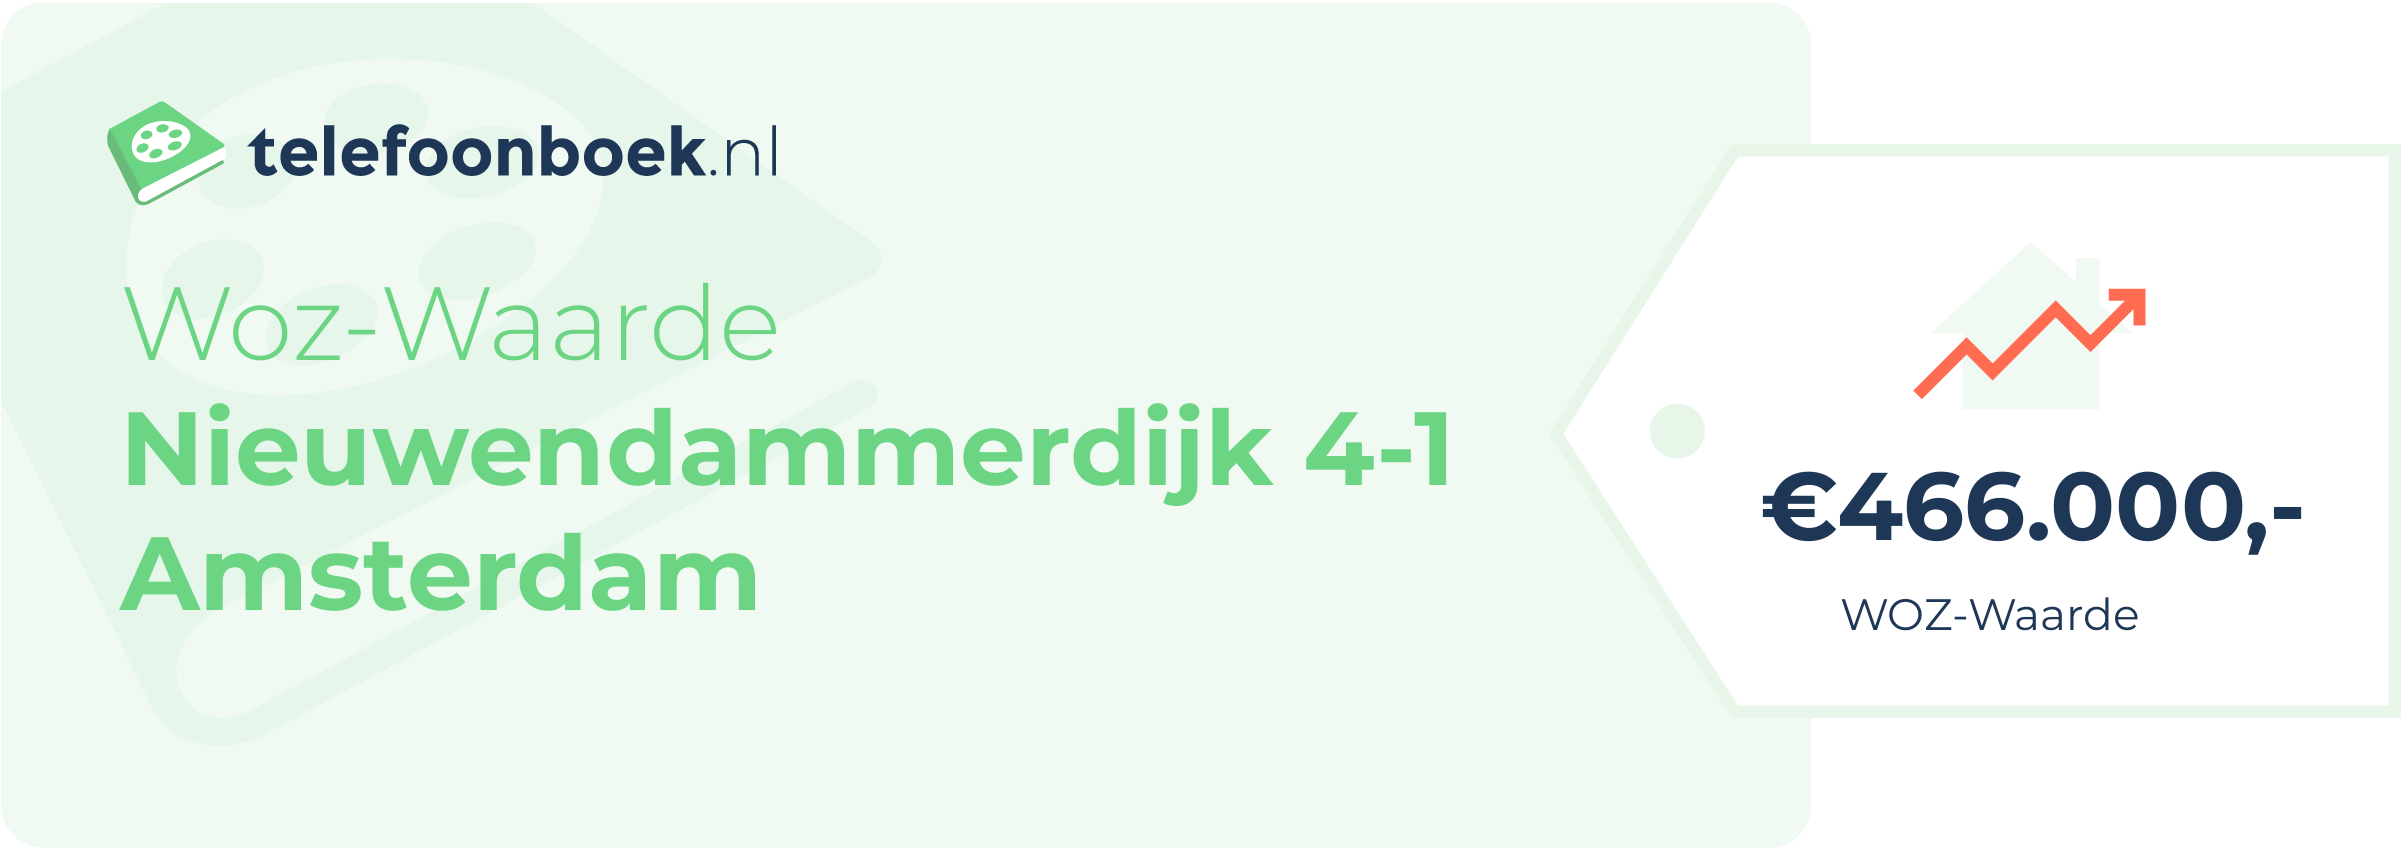 WOZ-waarde Nieuwendammerdijk 4-1 Amsterdam